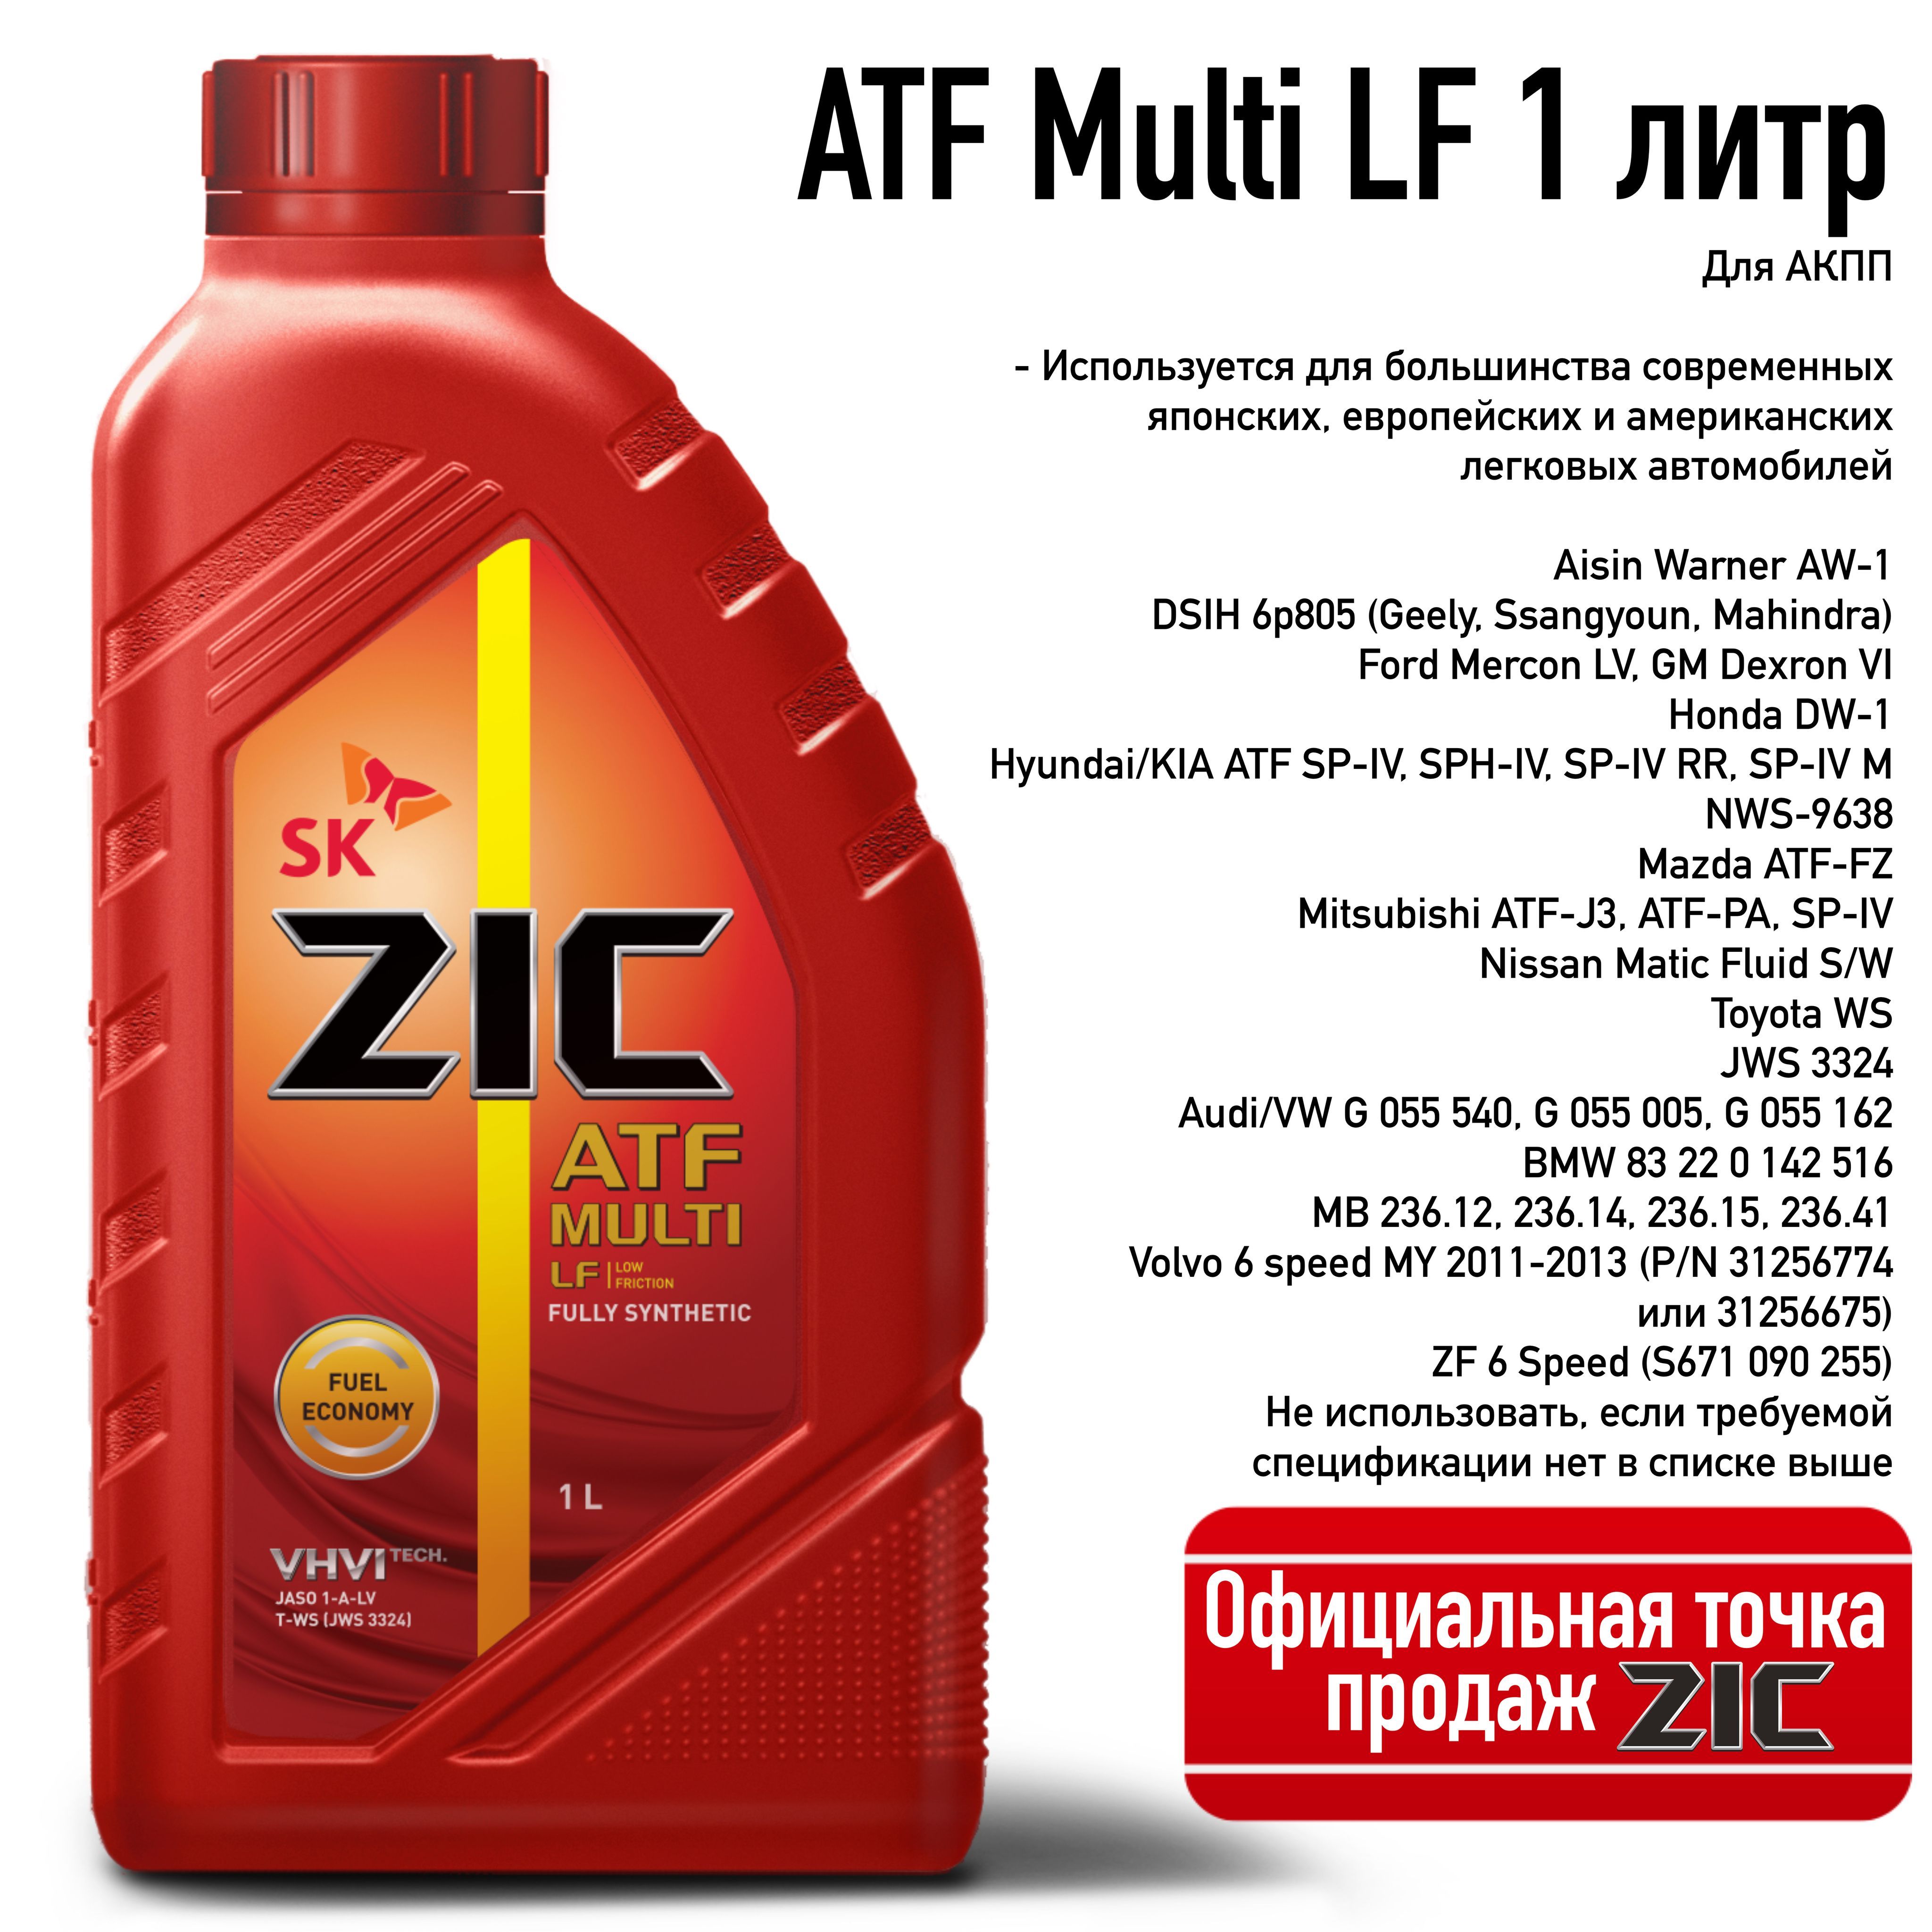 Масло zic atf multi lf. ZIC ATF Multi LF. ZIC ATF Multi LF цвет. ZIC Multi LF цвет. Масло Мульти LF.